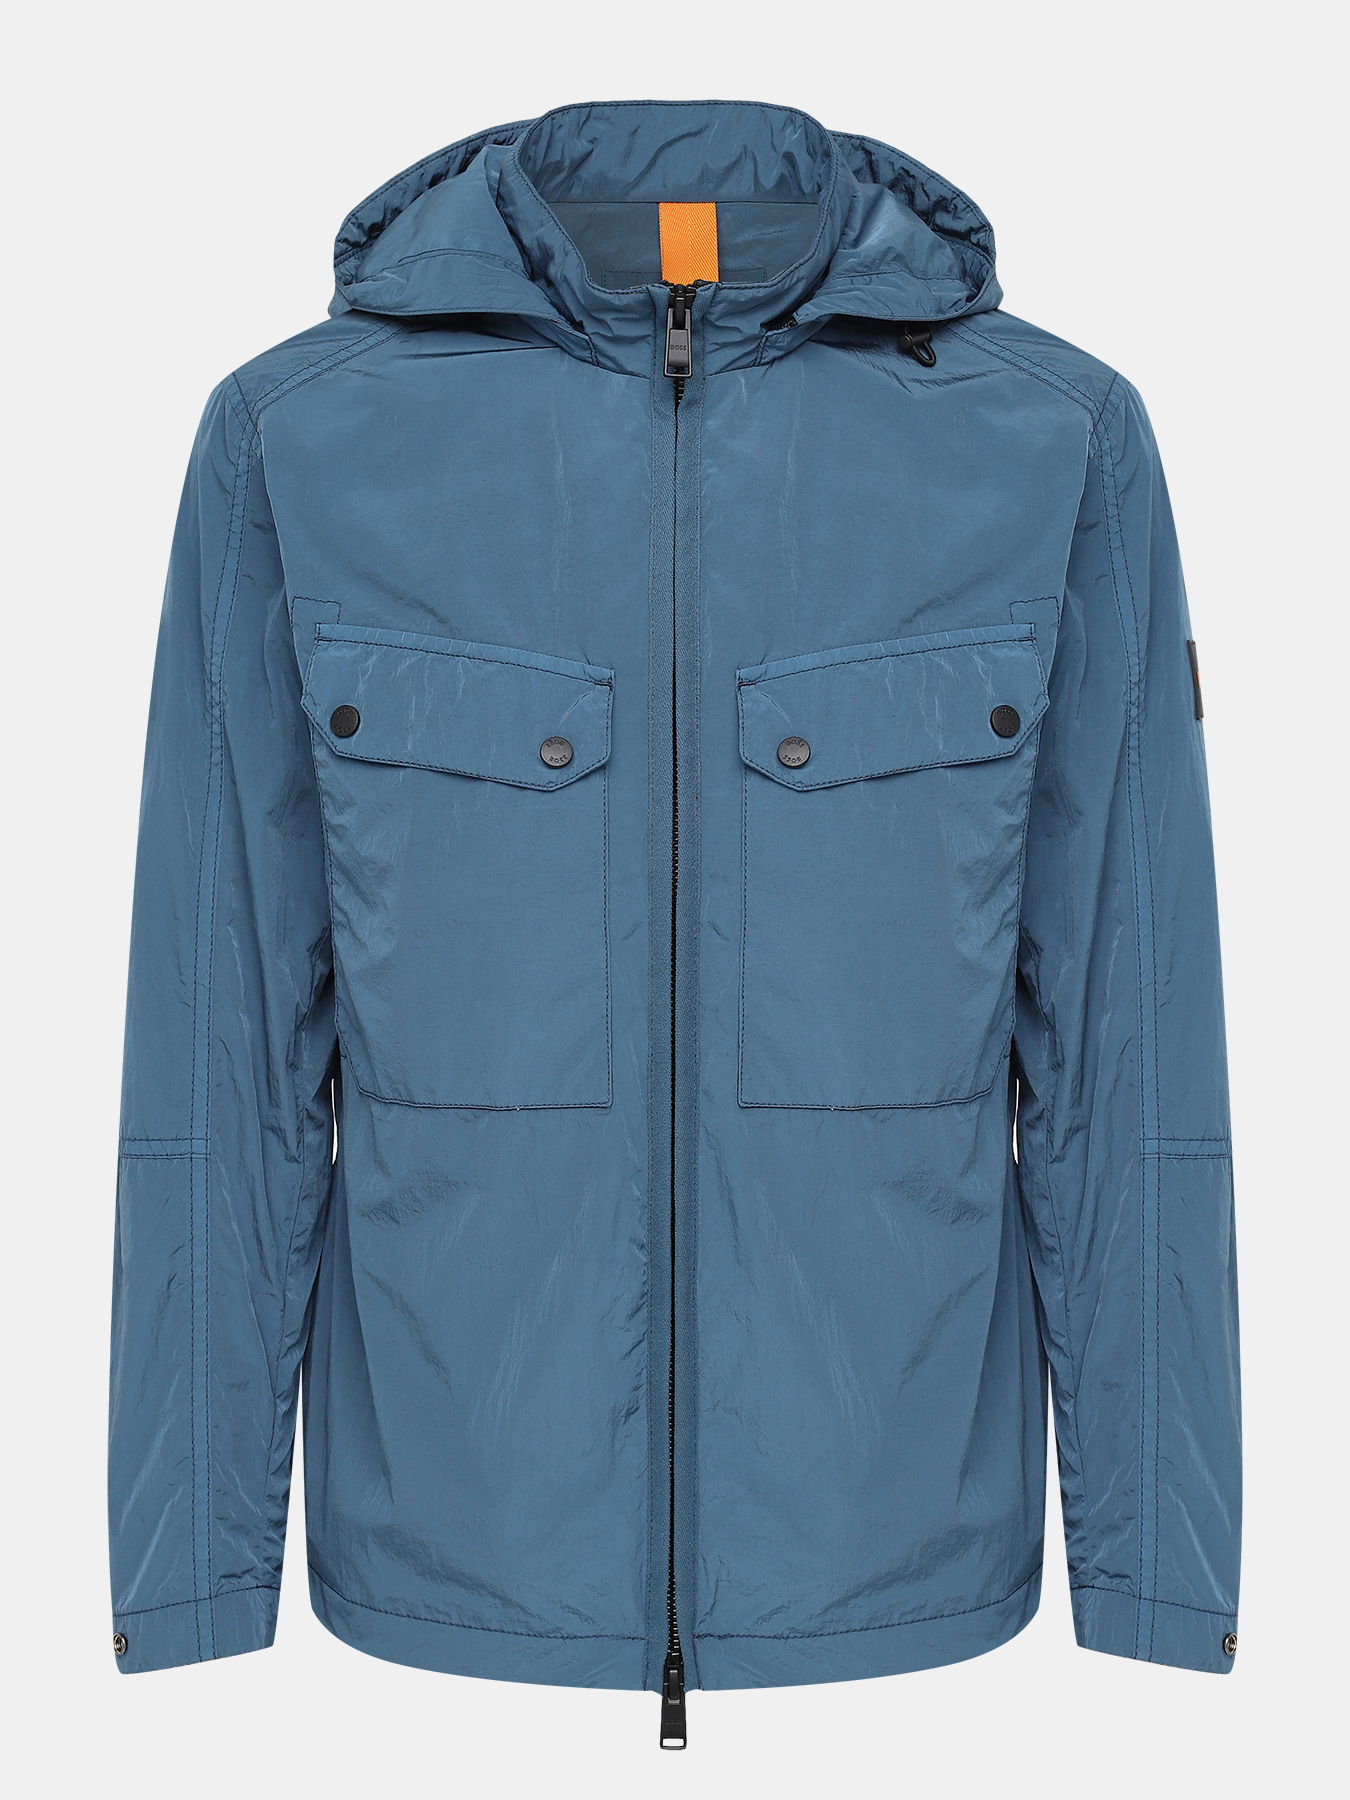 Куртка Odell D BOSS 421179-025, цвет синий, размер 48